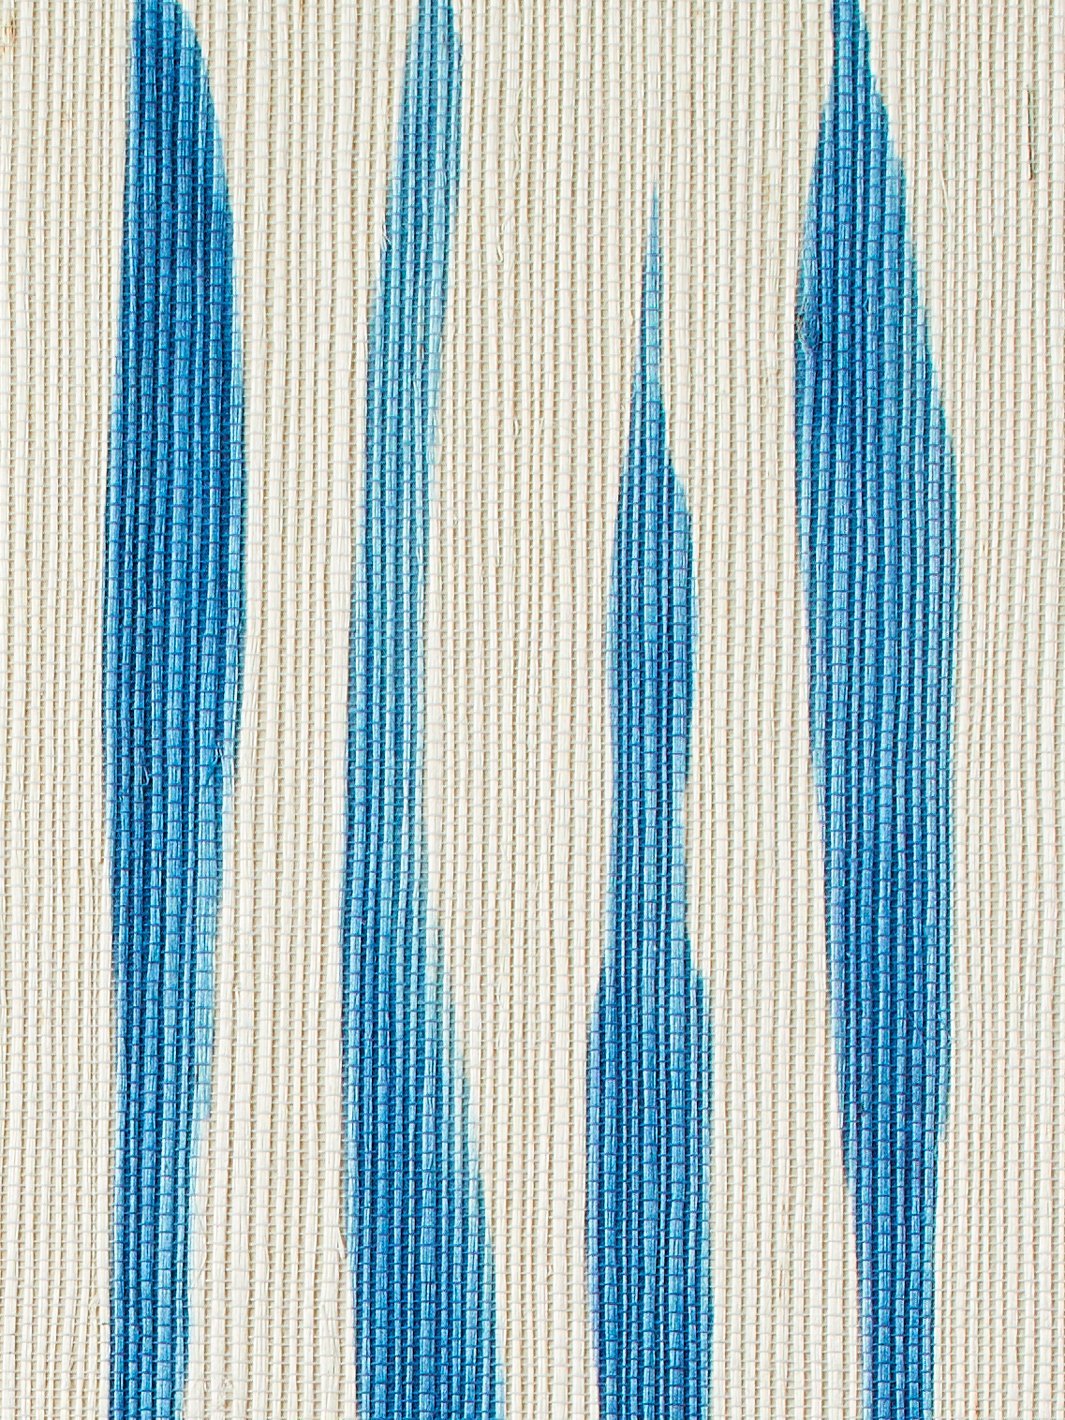 'Watercolor Weave Small' Grasscloth' Wallpaper by Wallshoppe - Lapis